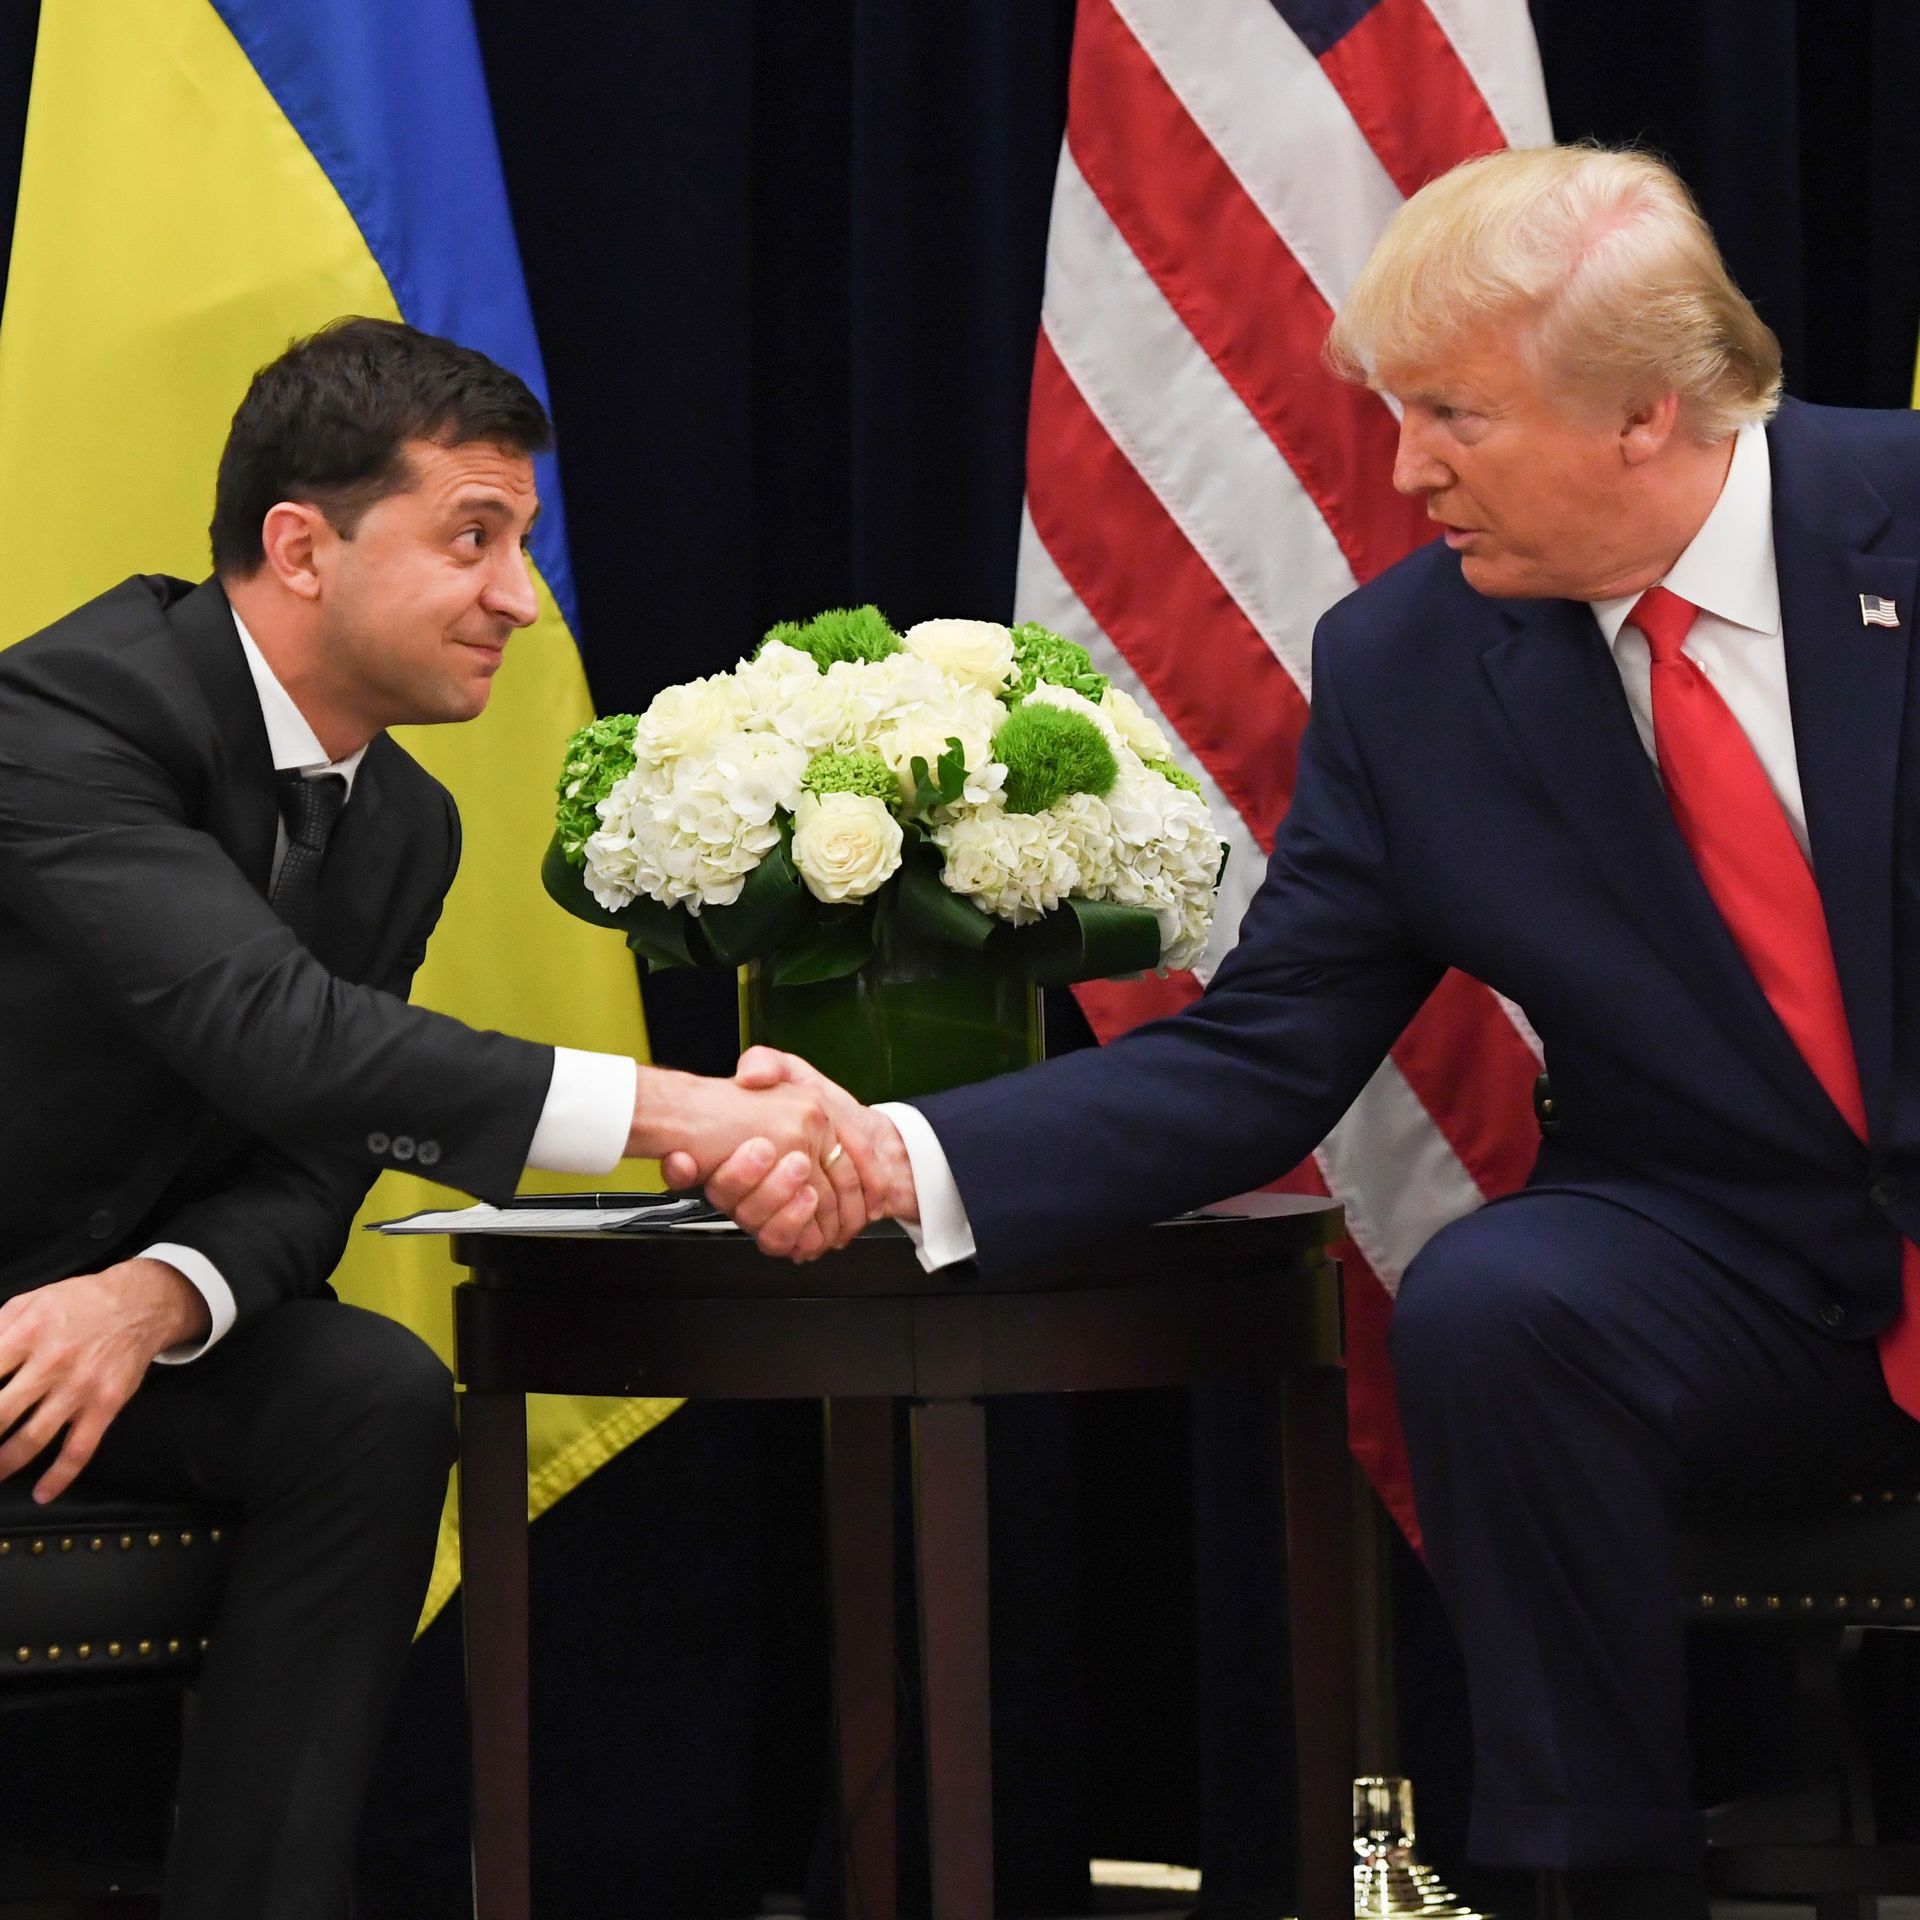 President Trump and Ukrainian president Volodymyr Zelensky shake hands